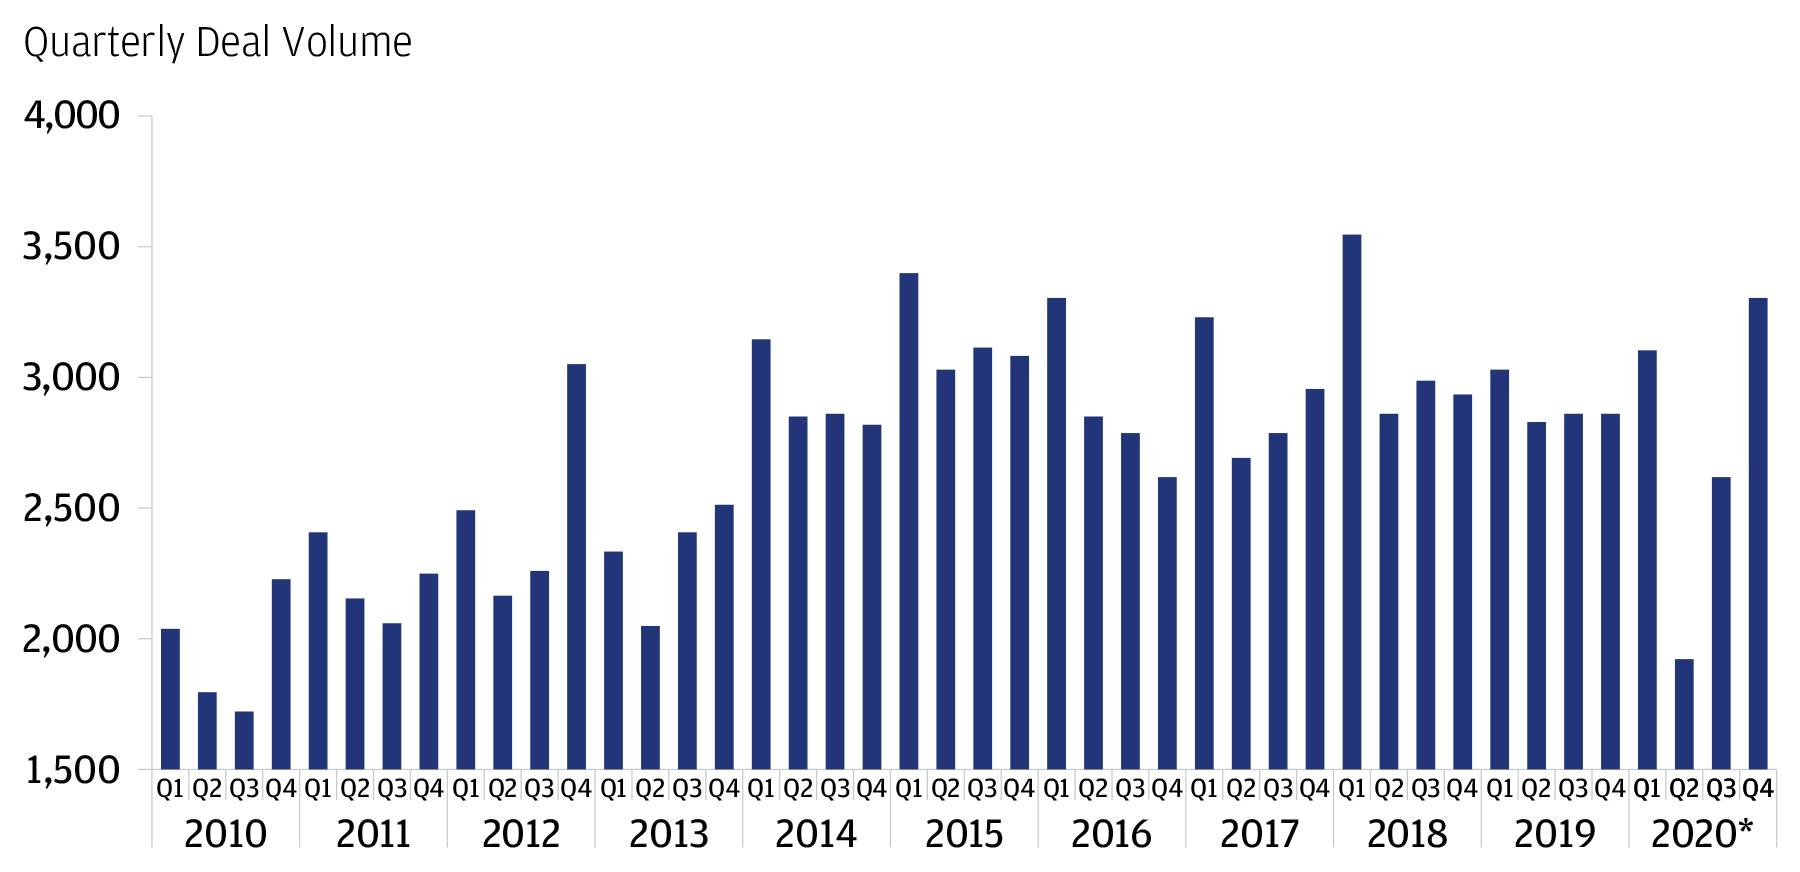 Graph showing quarterly U.S. M&A deal volume since 2010